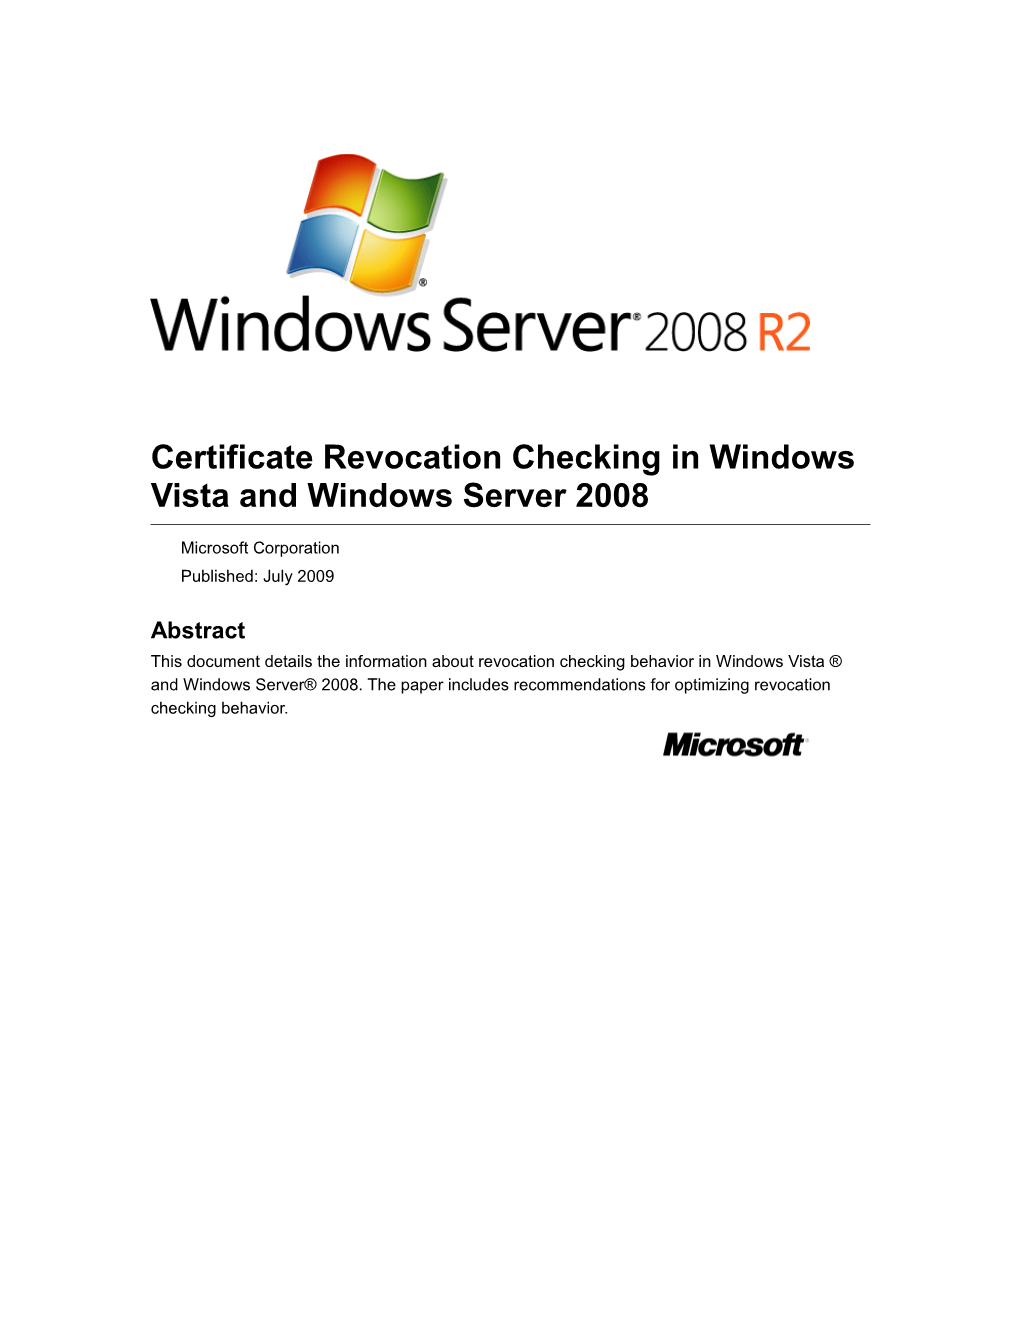 Certificate Revocation Checking in Windows Vista and Windows Server 2008